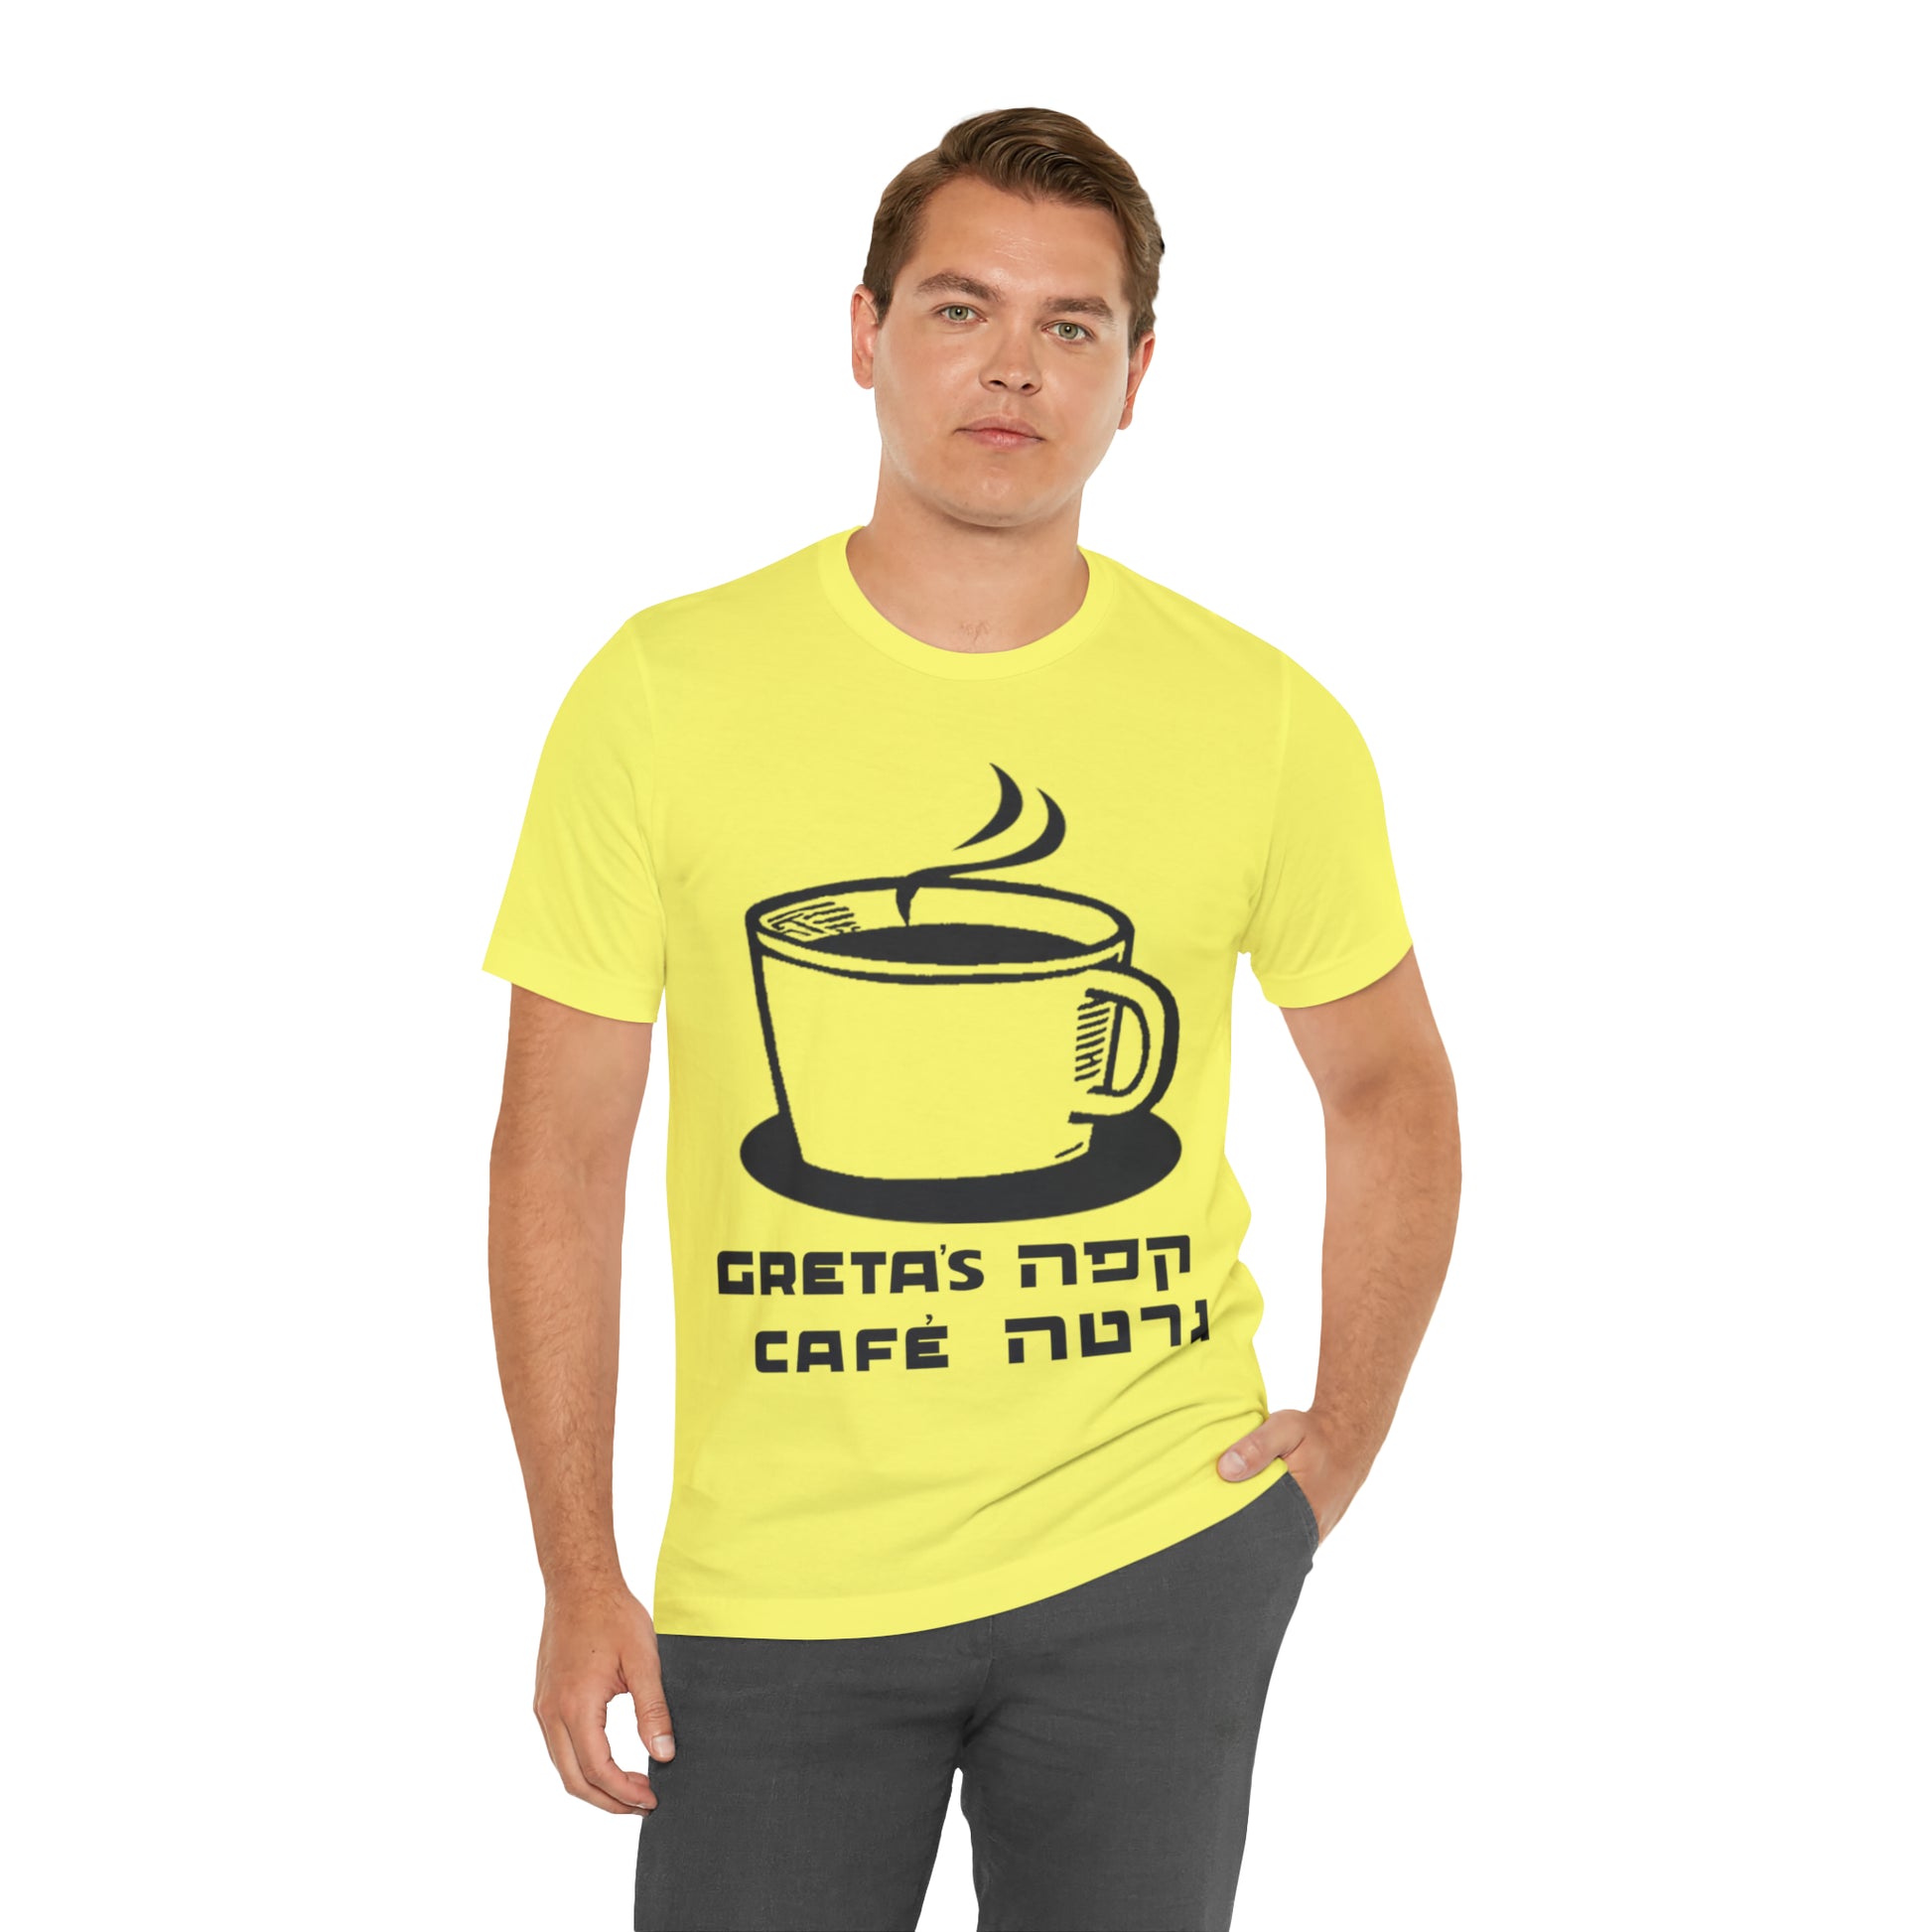 Greta's Cafe shirt - yellow